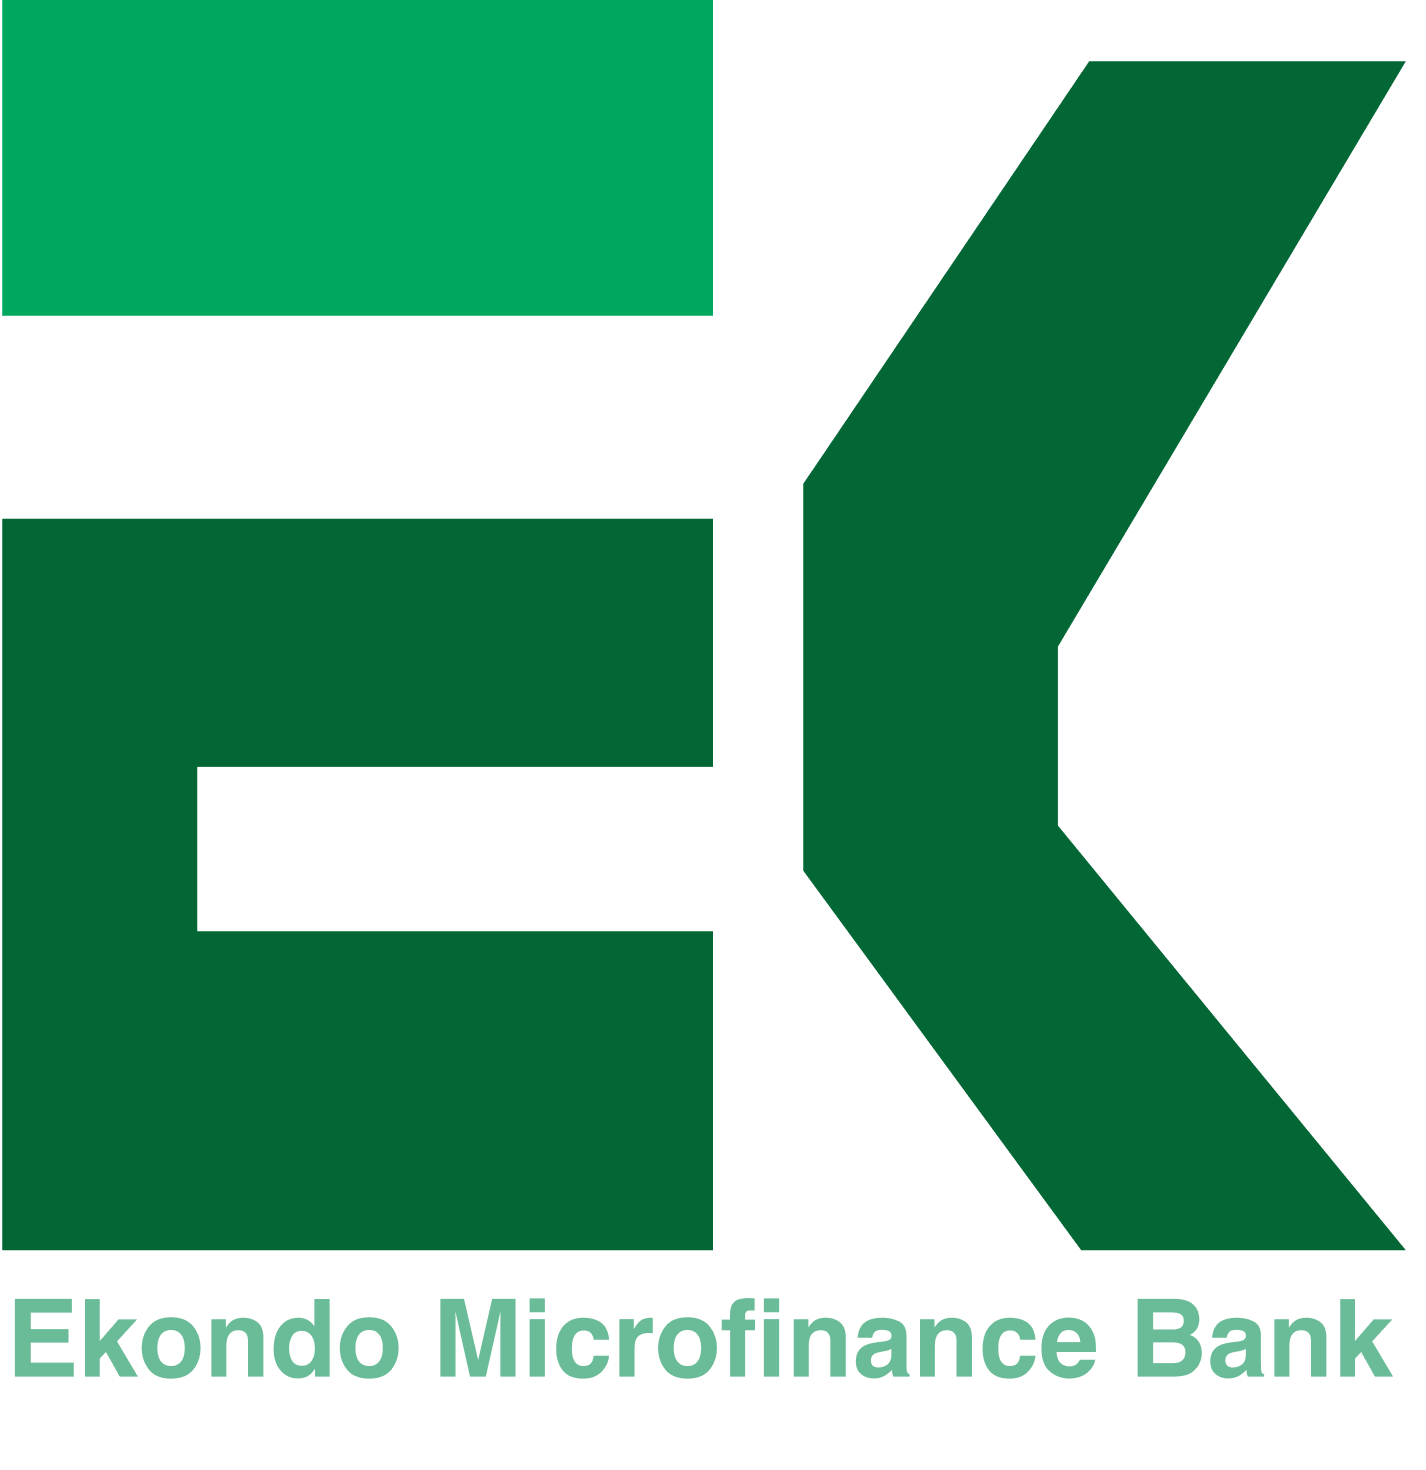 Ekondo Microfinance Bank